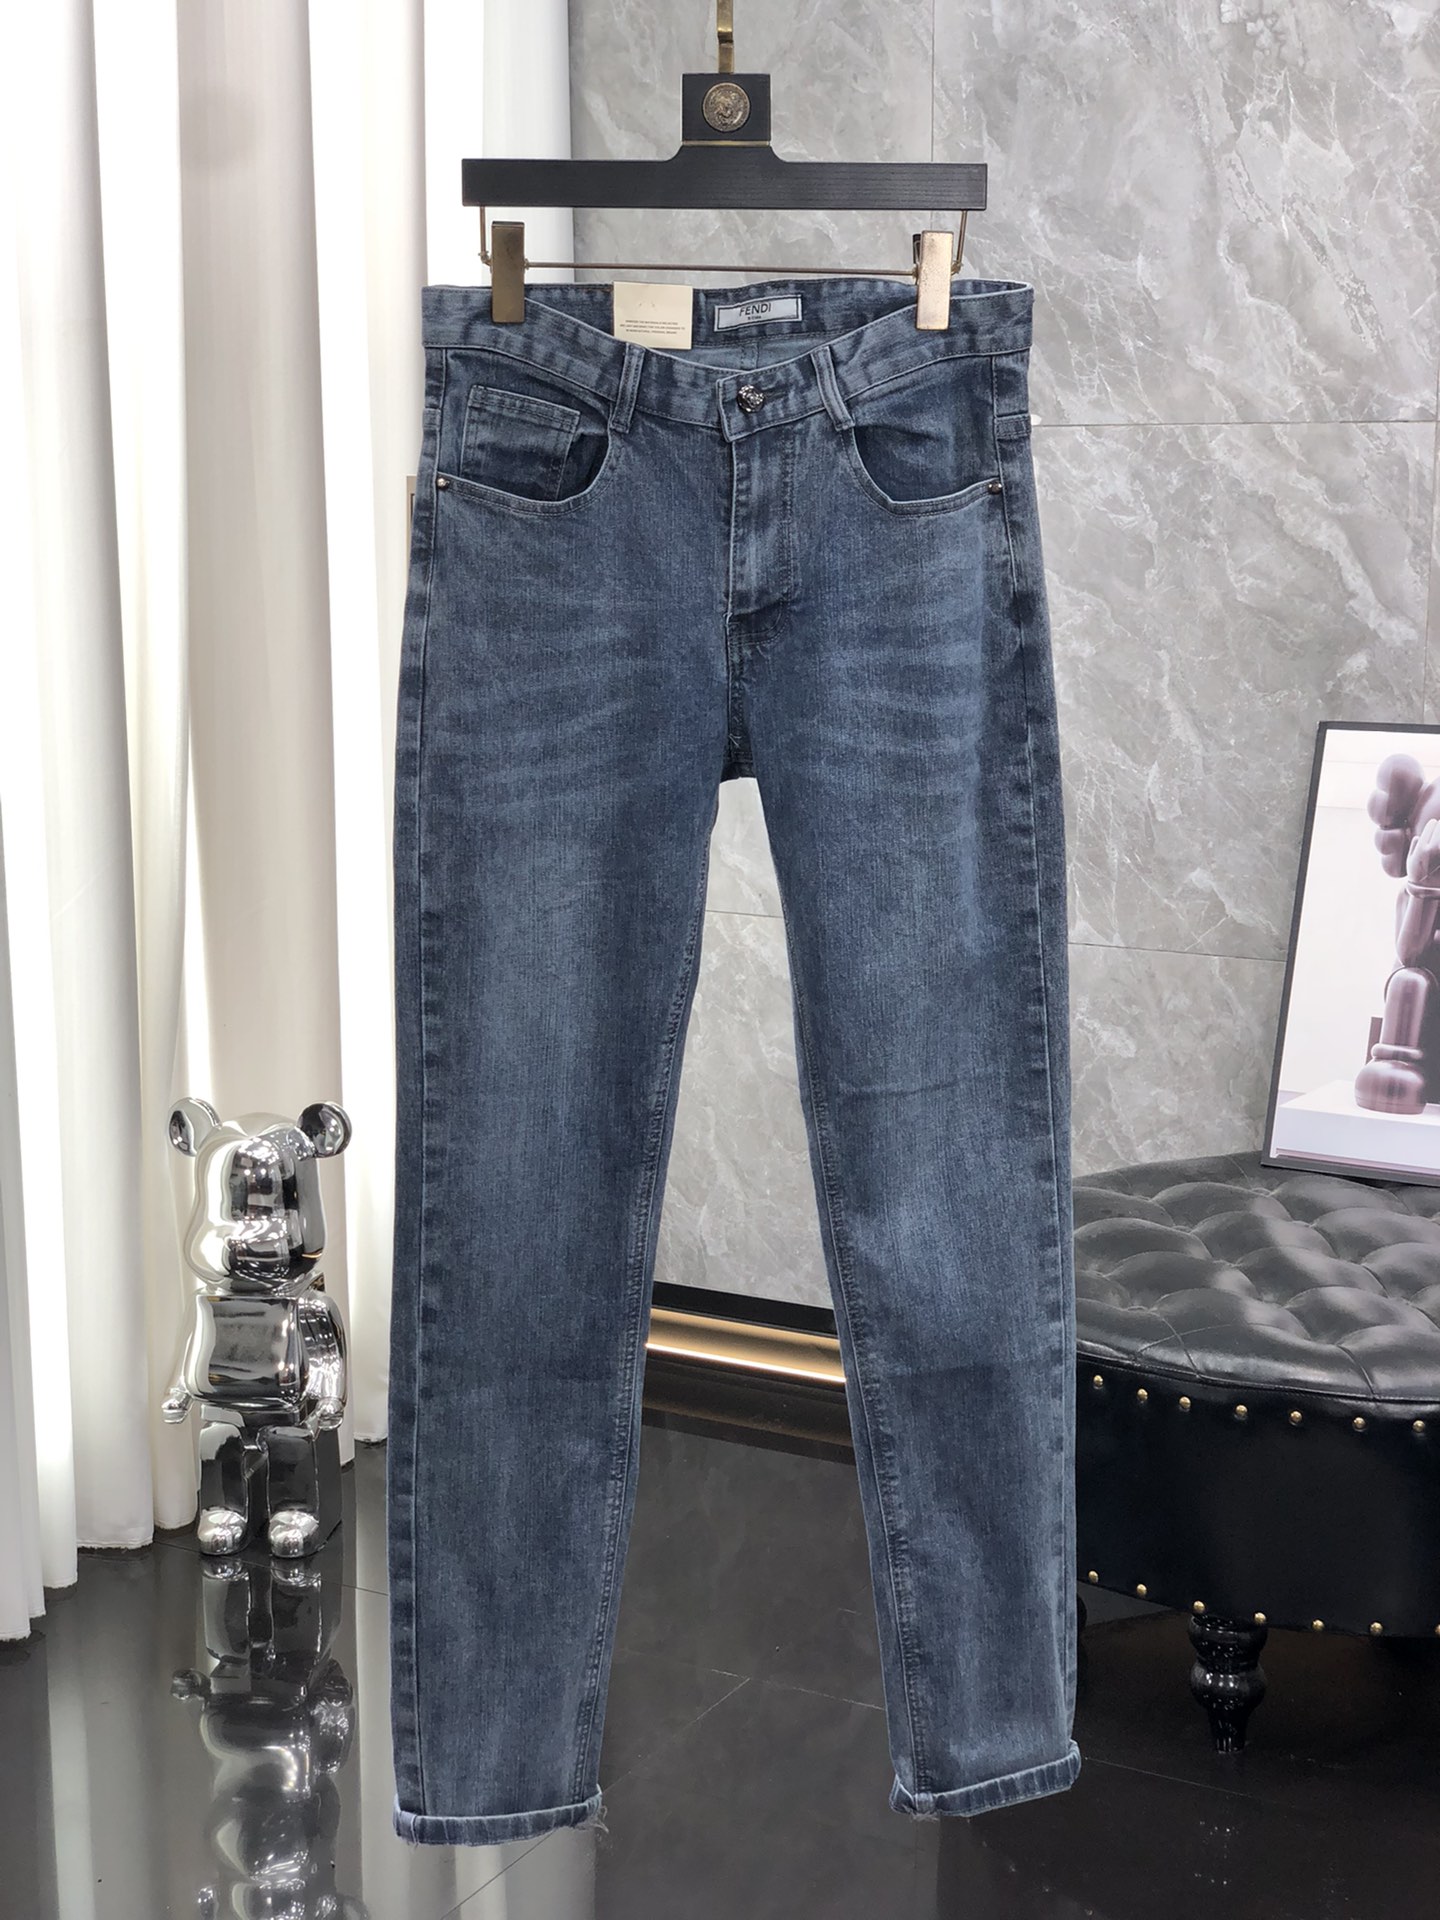 Fendi Clothing Jeans Men Denim Genuine Leather Fall Collection Fashion